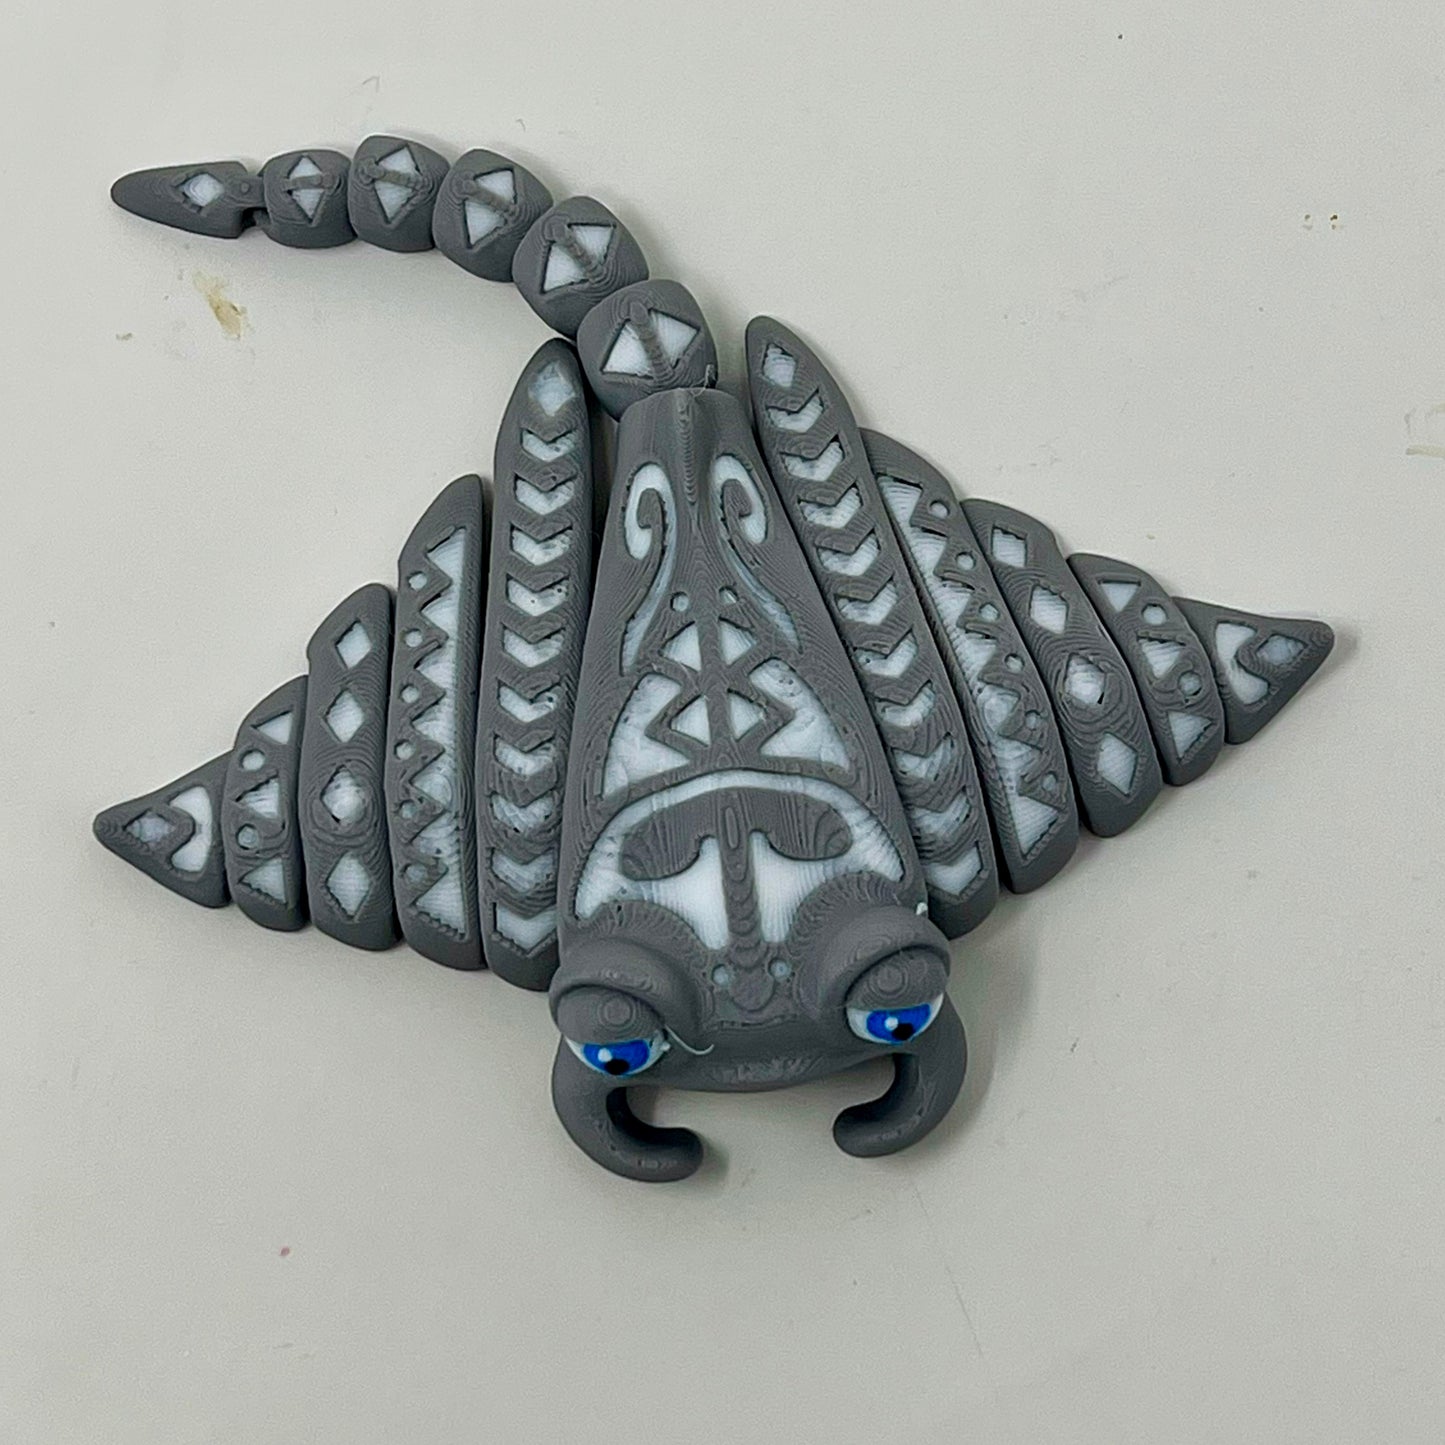 3D Printed Articulated Manta Ray